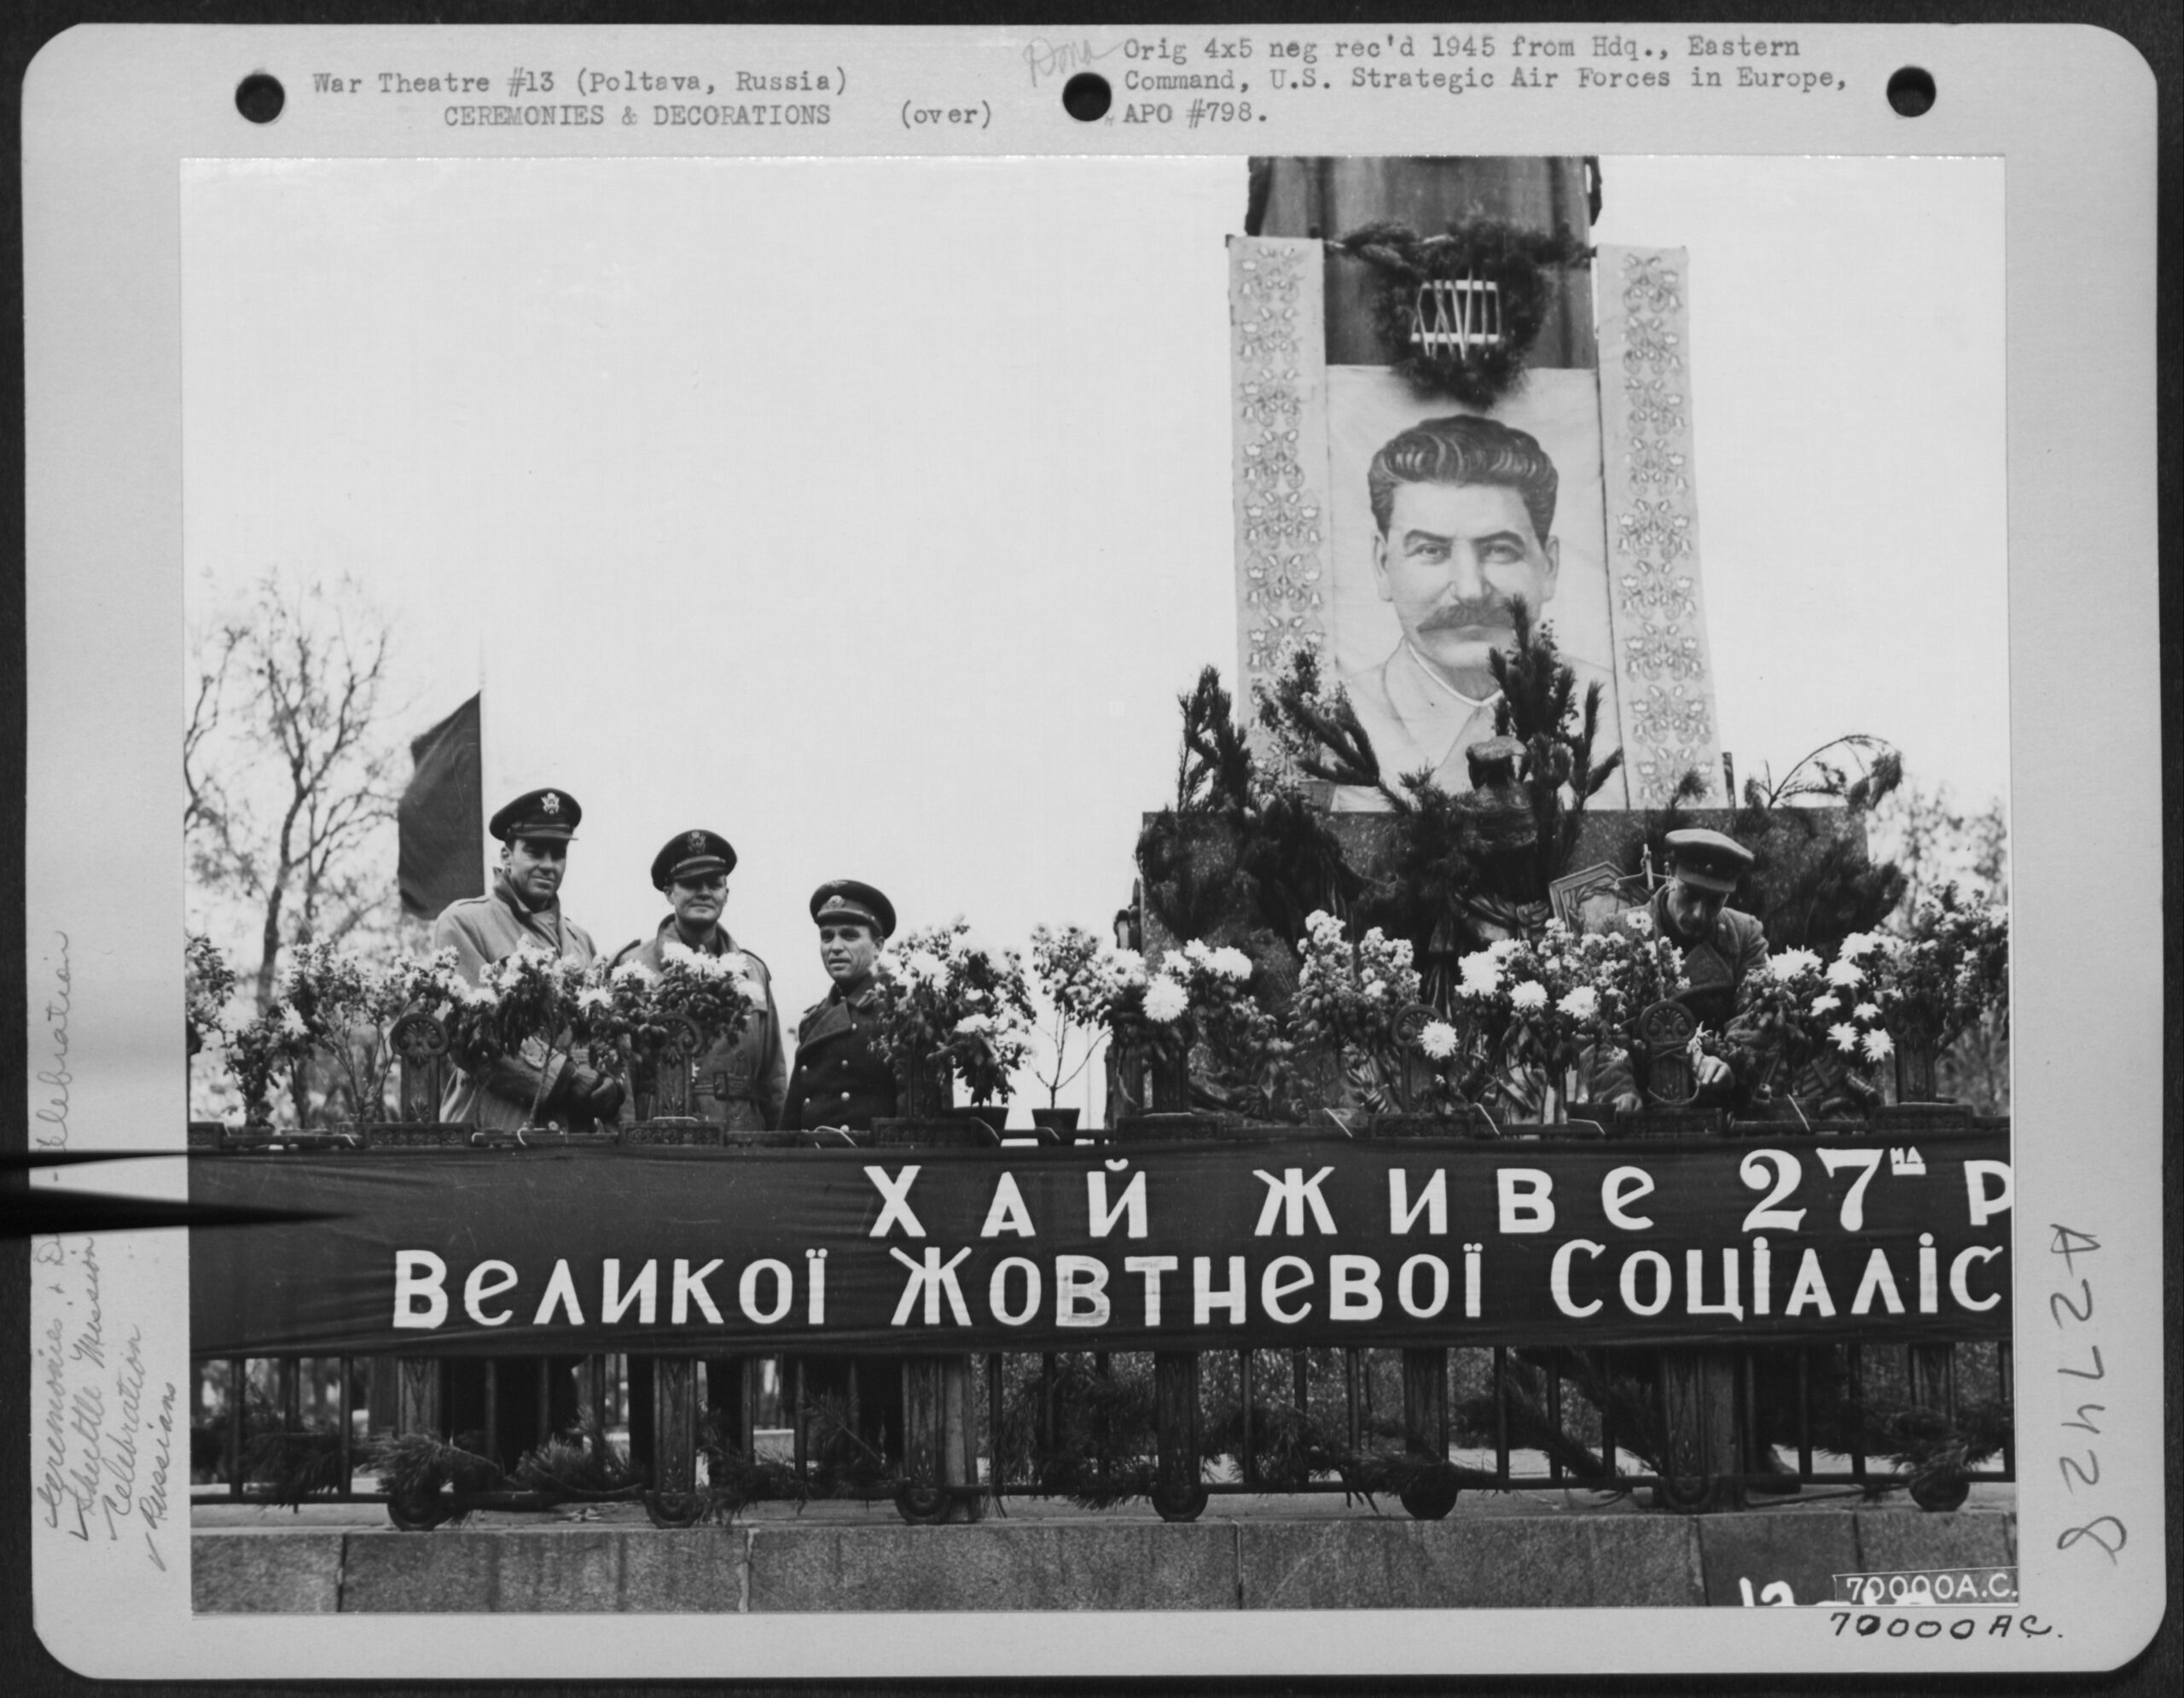 Red Revolution celebration in Poltava – National Archives Identifier: 204920110